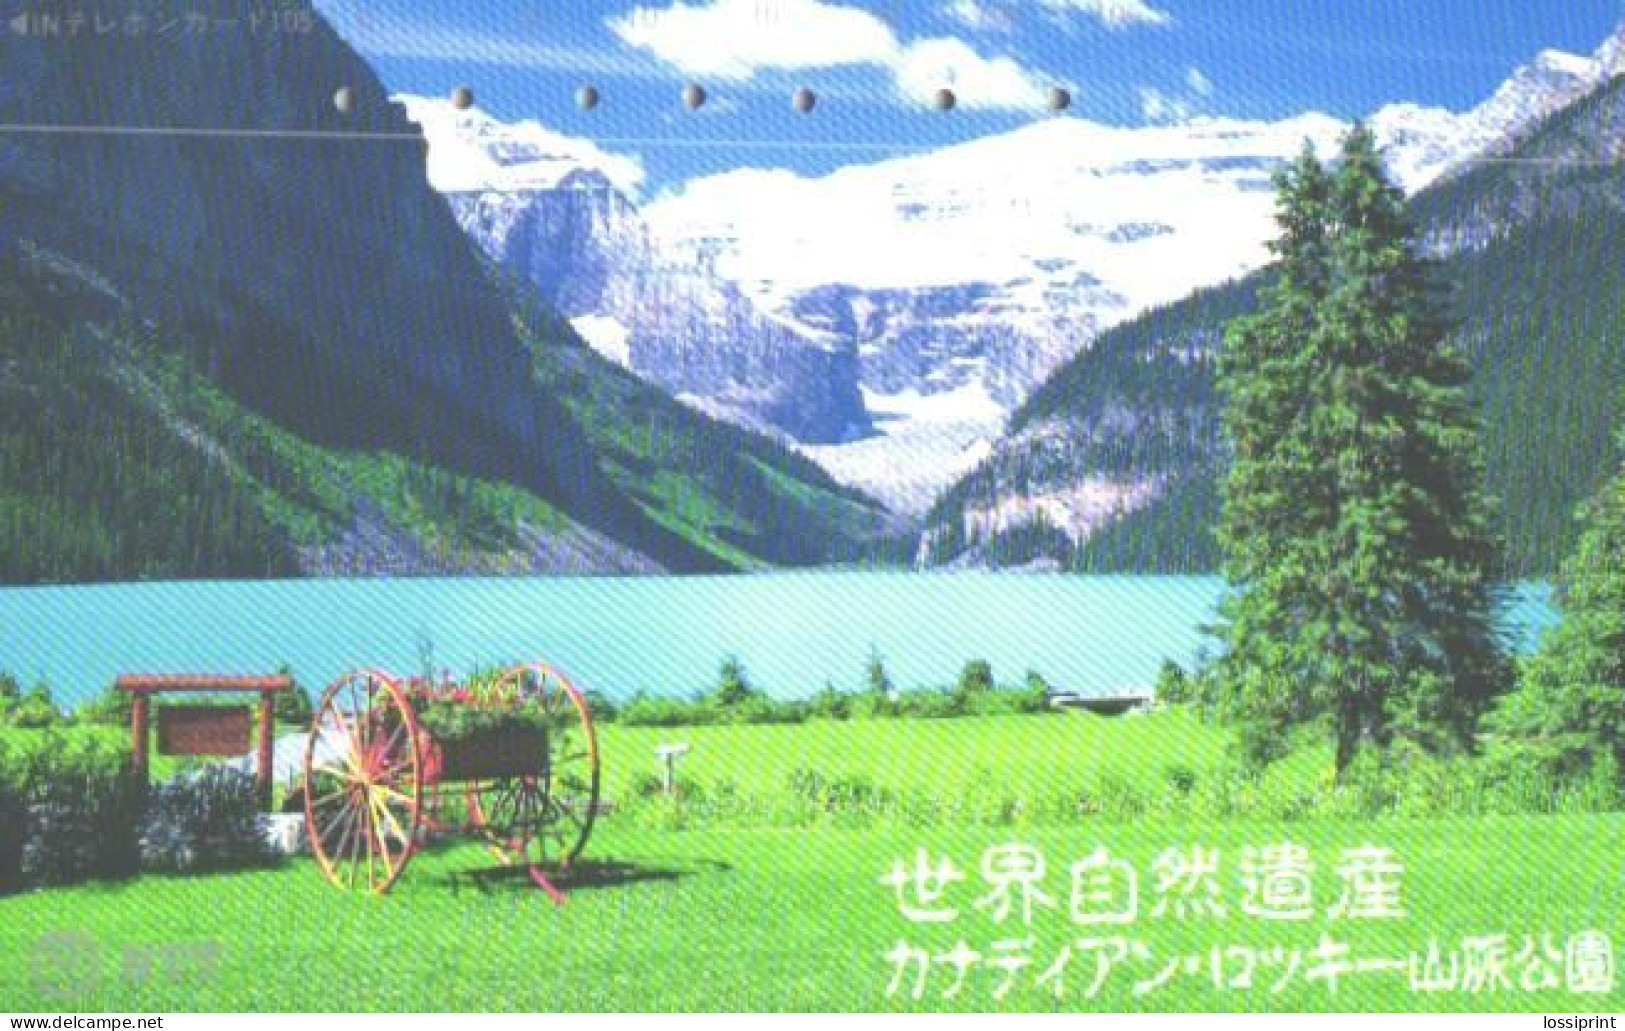 Japan:Used Phonecard, NTT, 105 Units, Lake And Mountains - Gebirgslandschaften